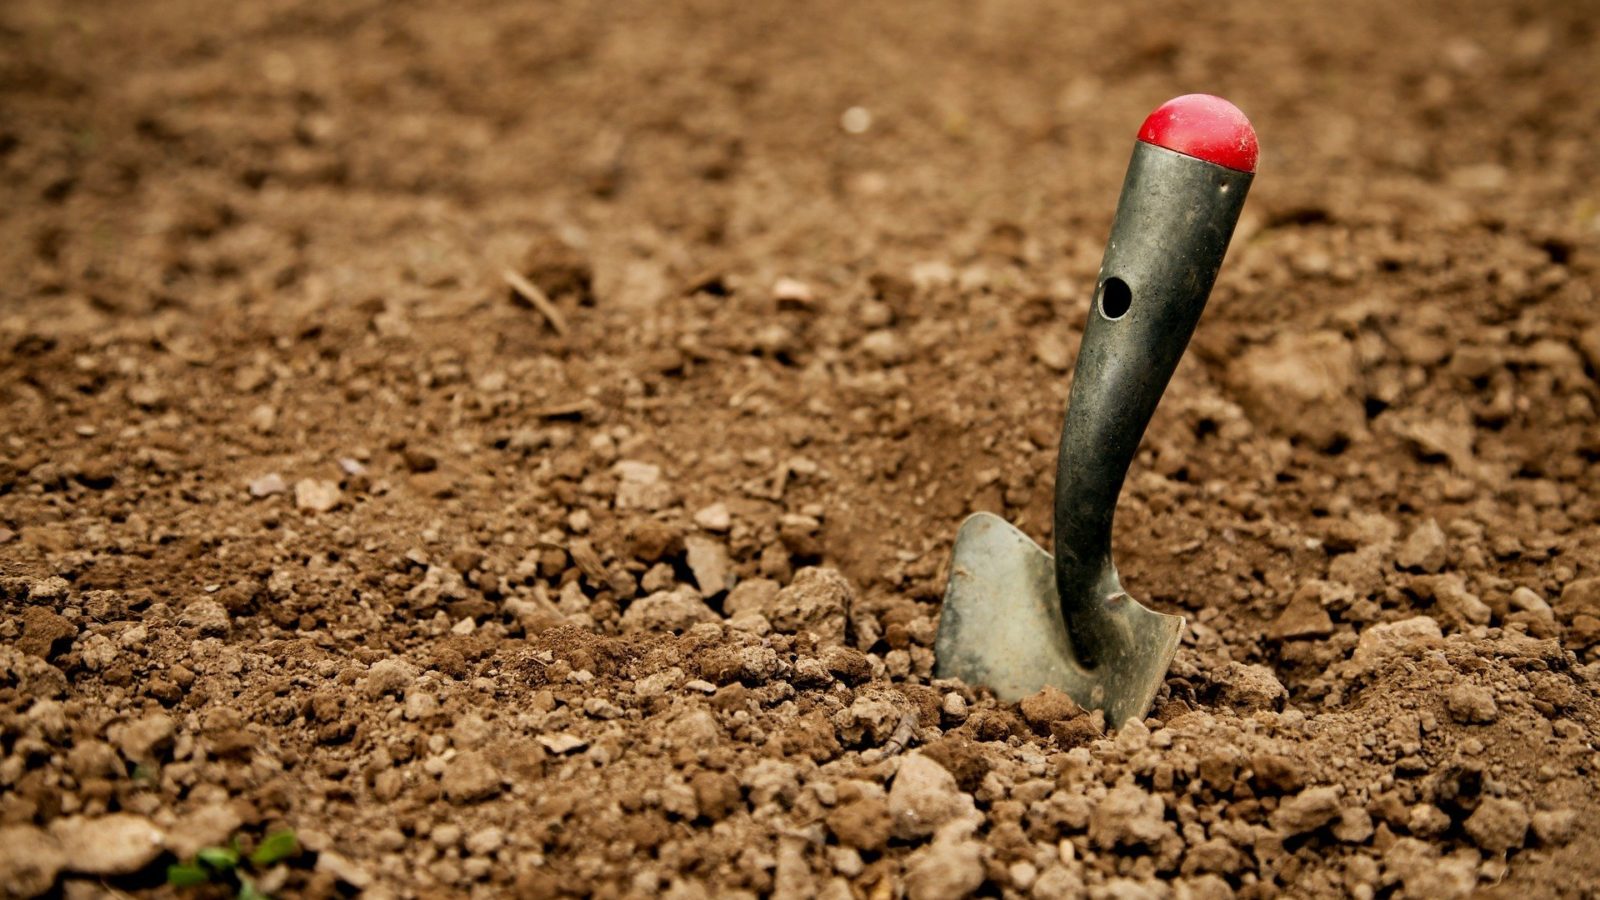 Gardening spade in dirt